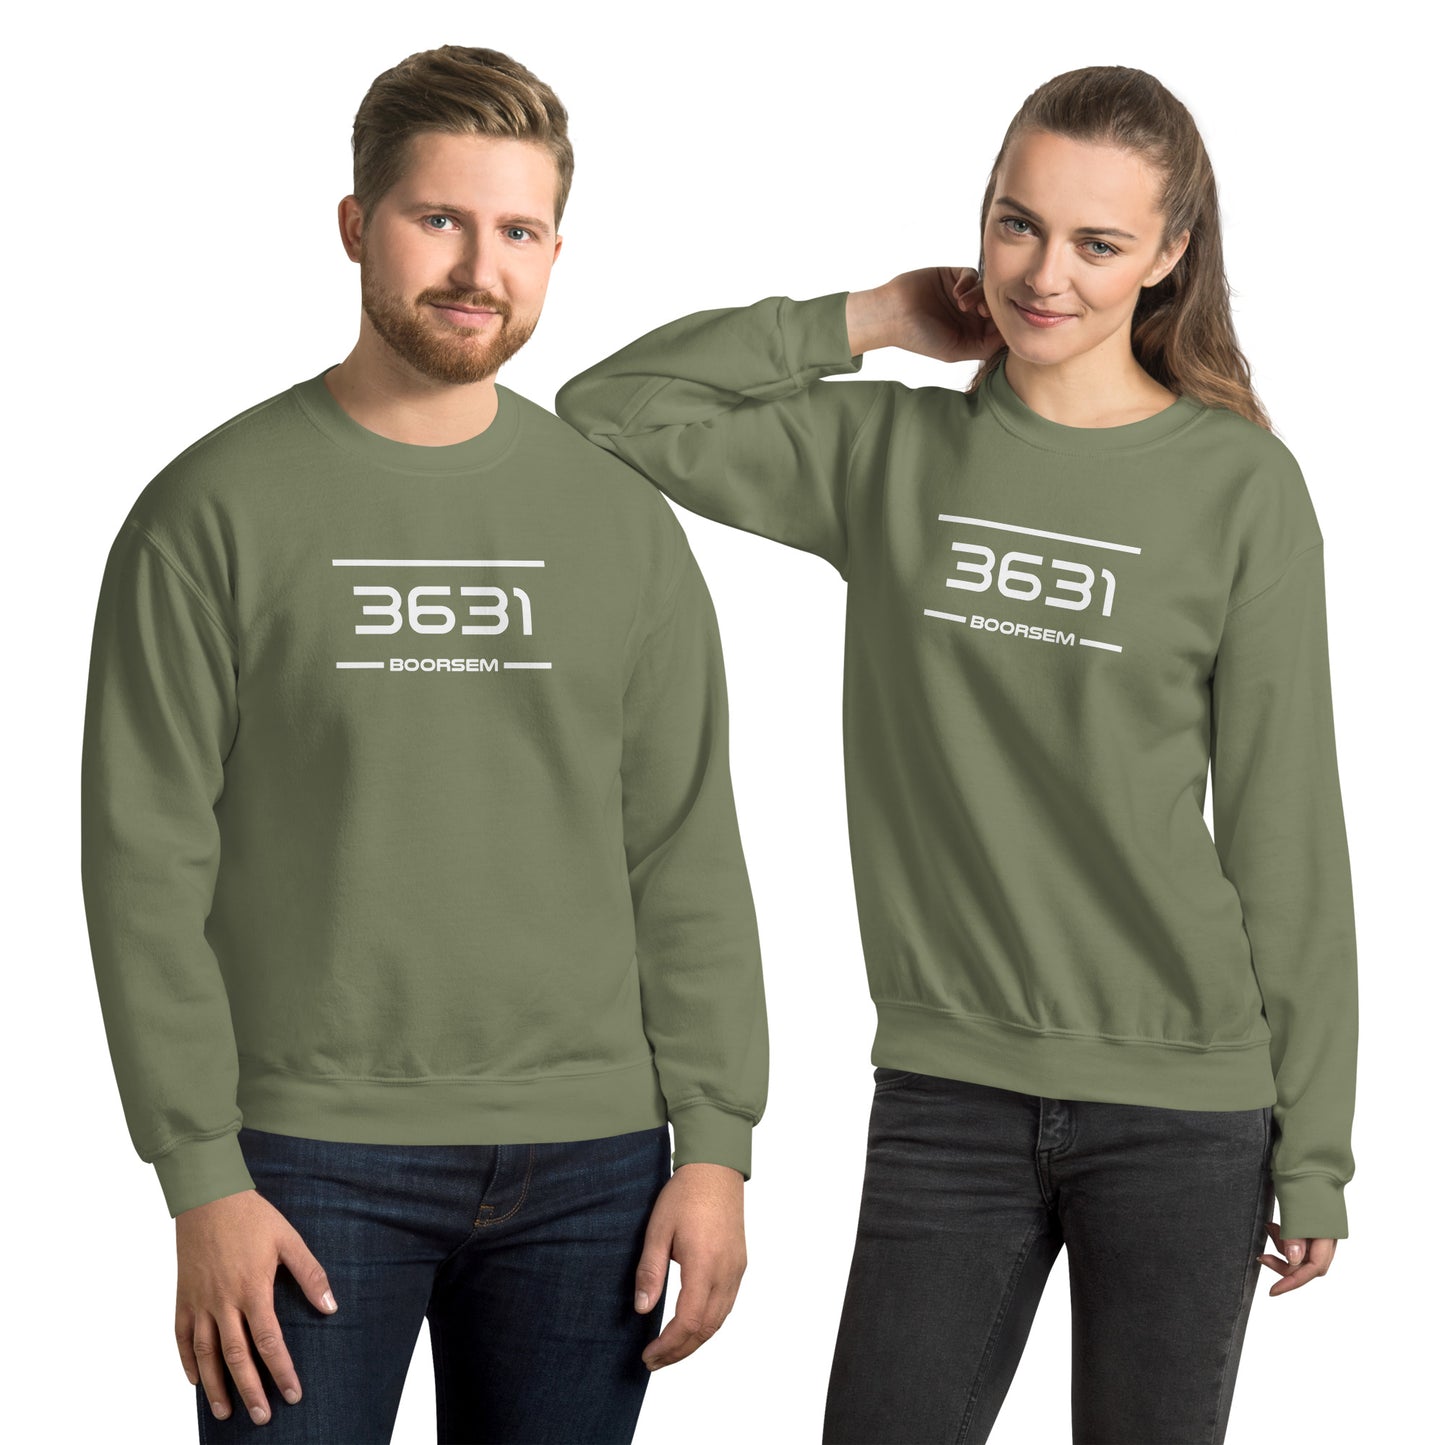 Sweater - 3631 - Boorsem (M/V)